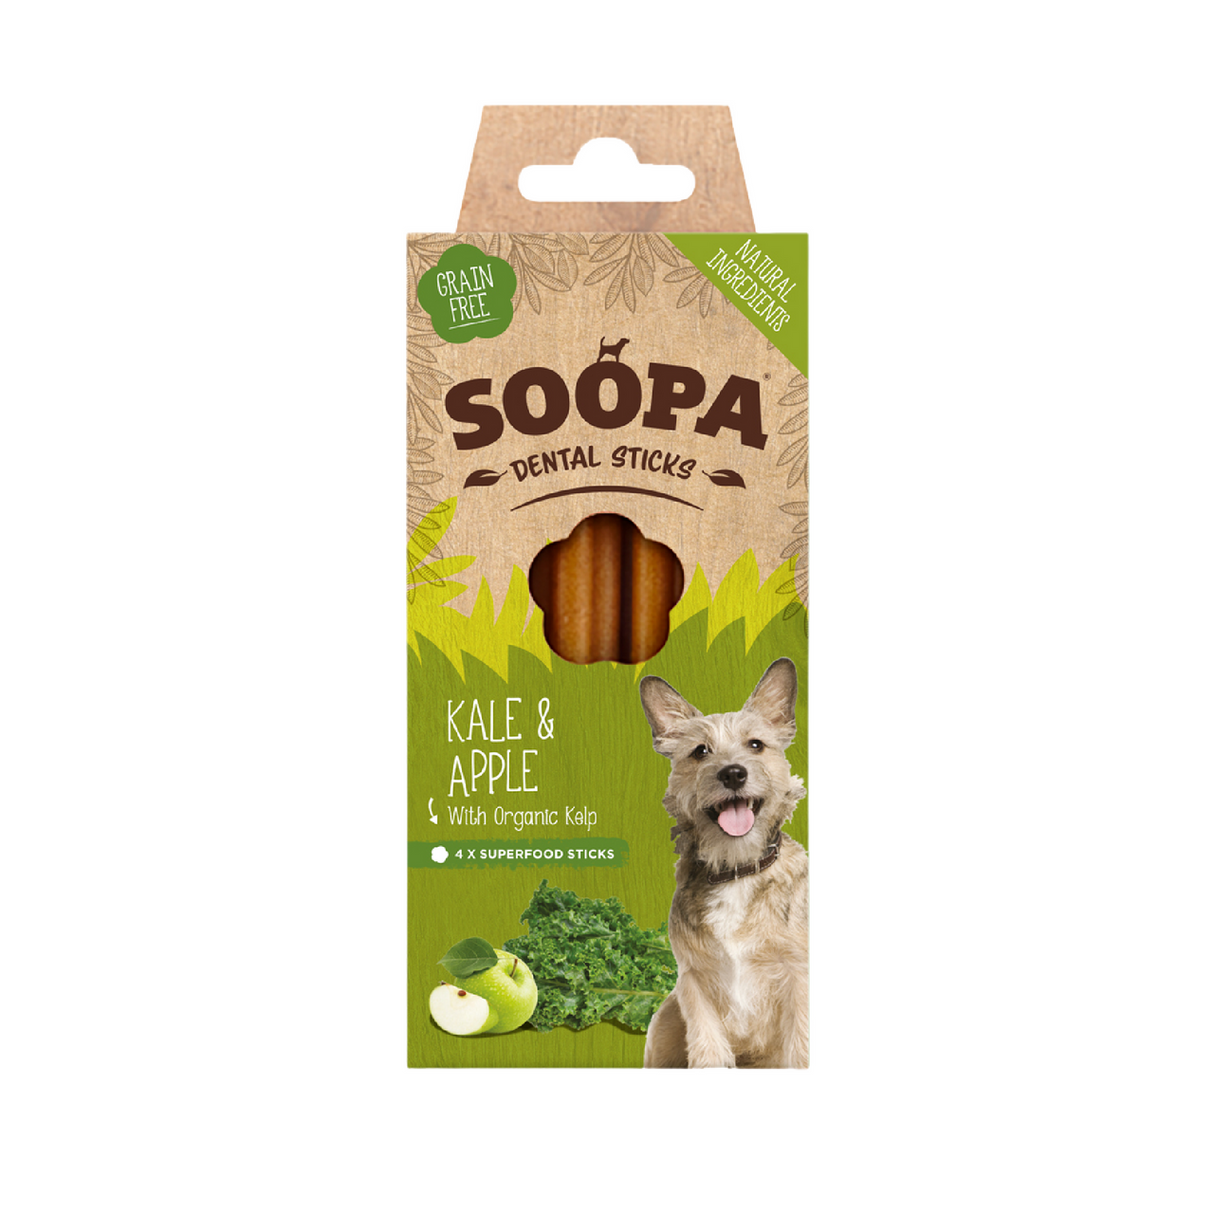 Soopa Kale and Apple Dental Sticks